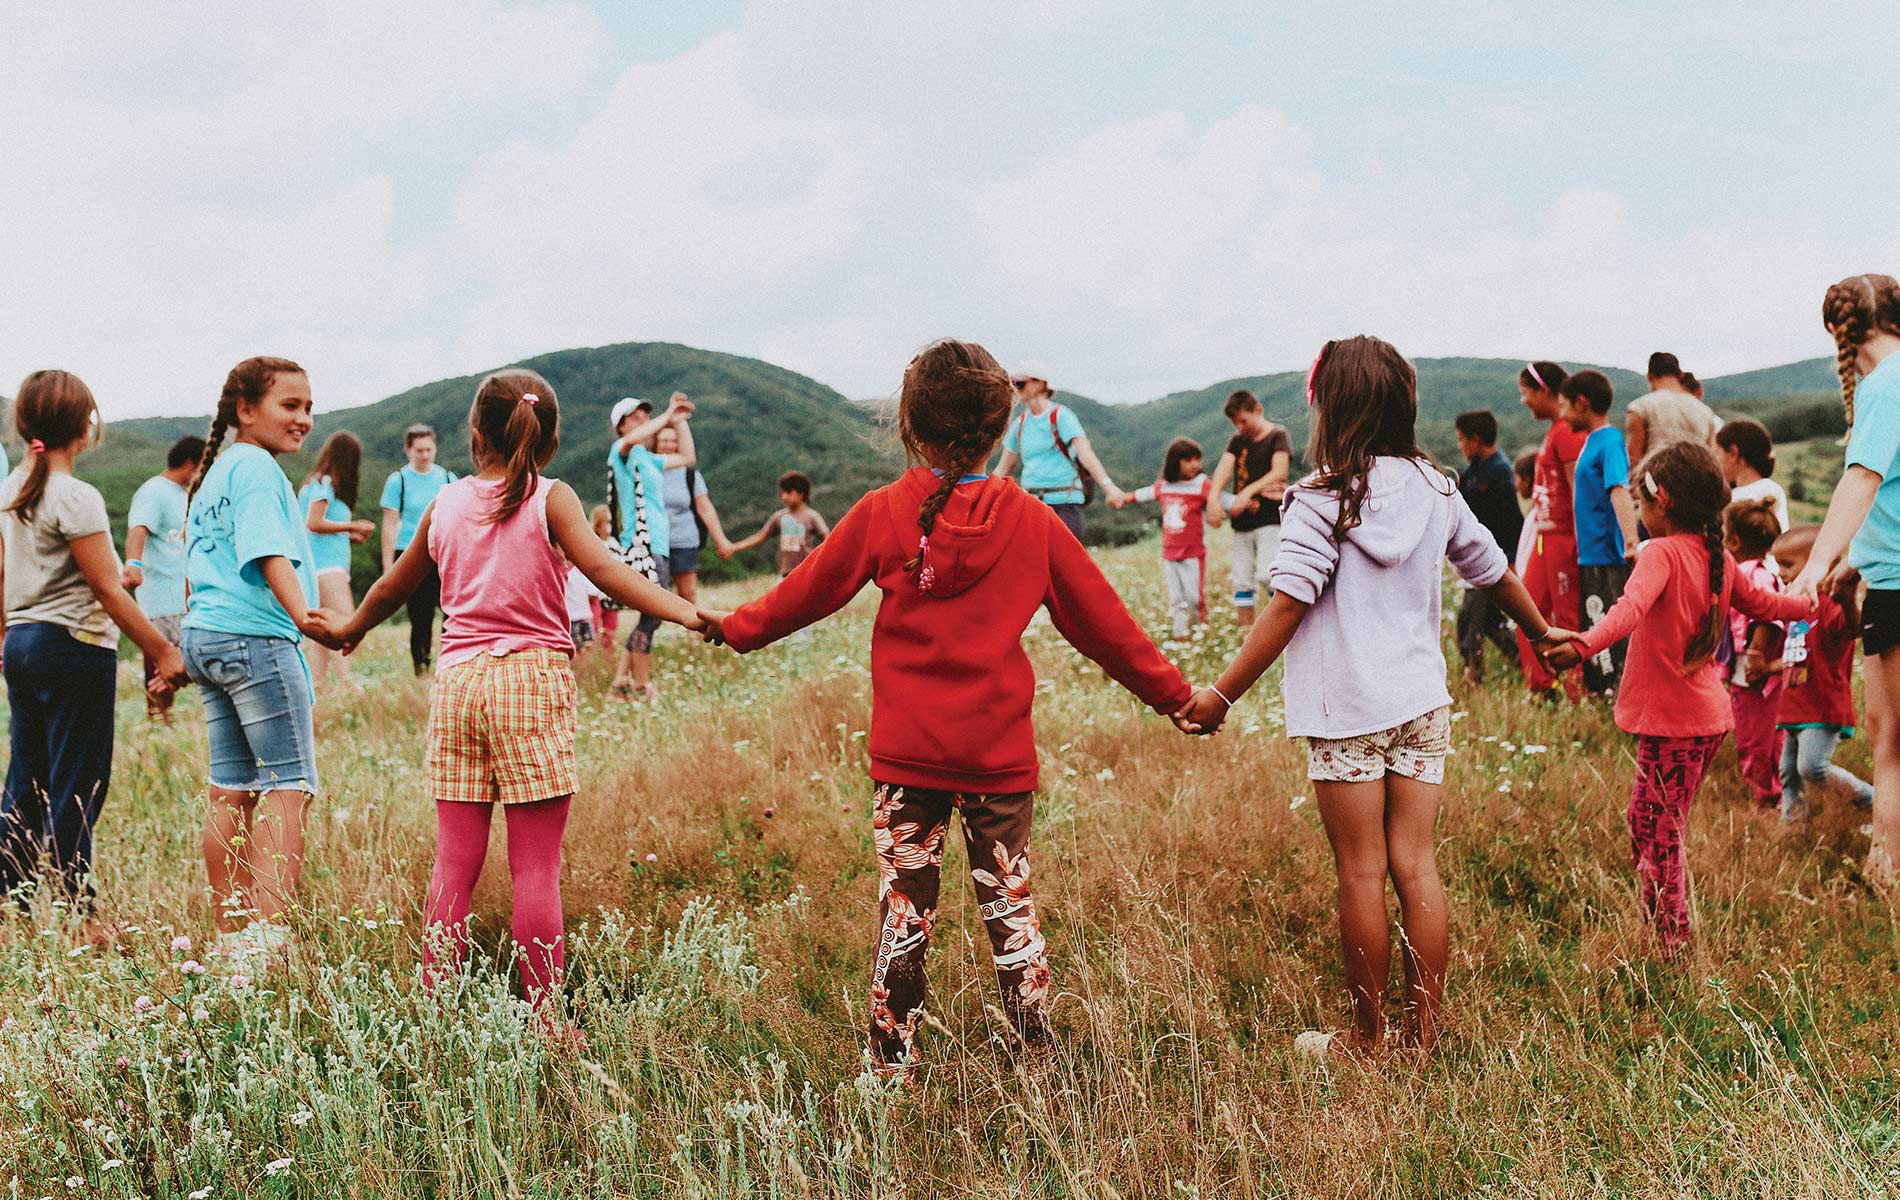 Children in a field holding hands